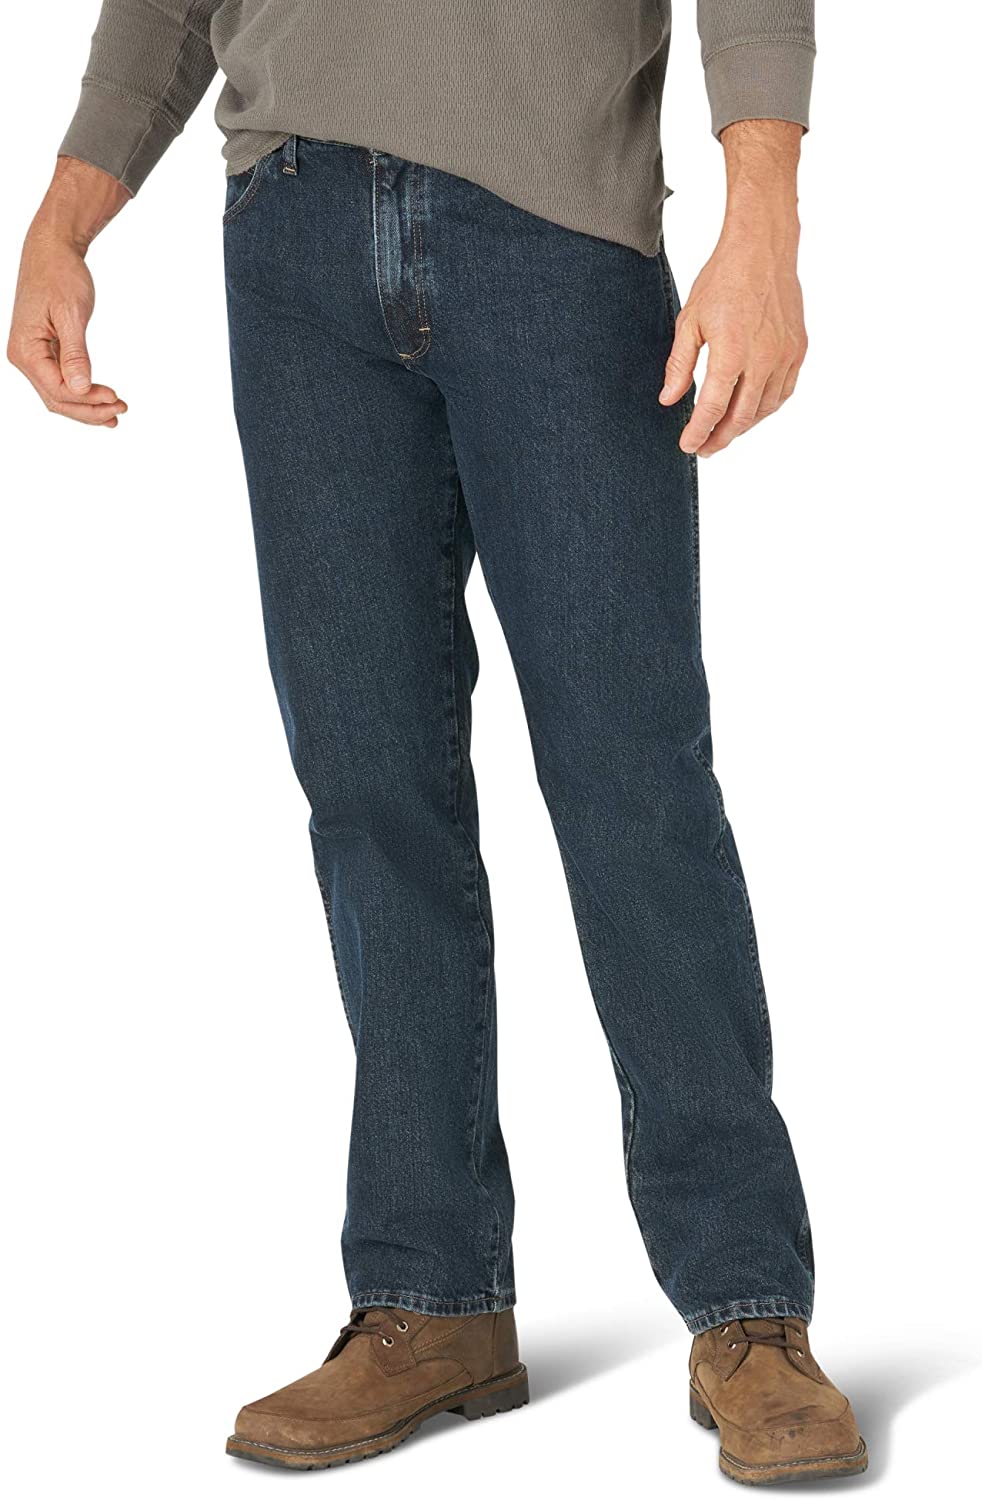 Wrangler Authentics Men's Classic 5-Pocket Regular Fit Flex Jean